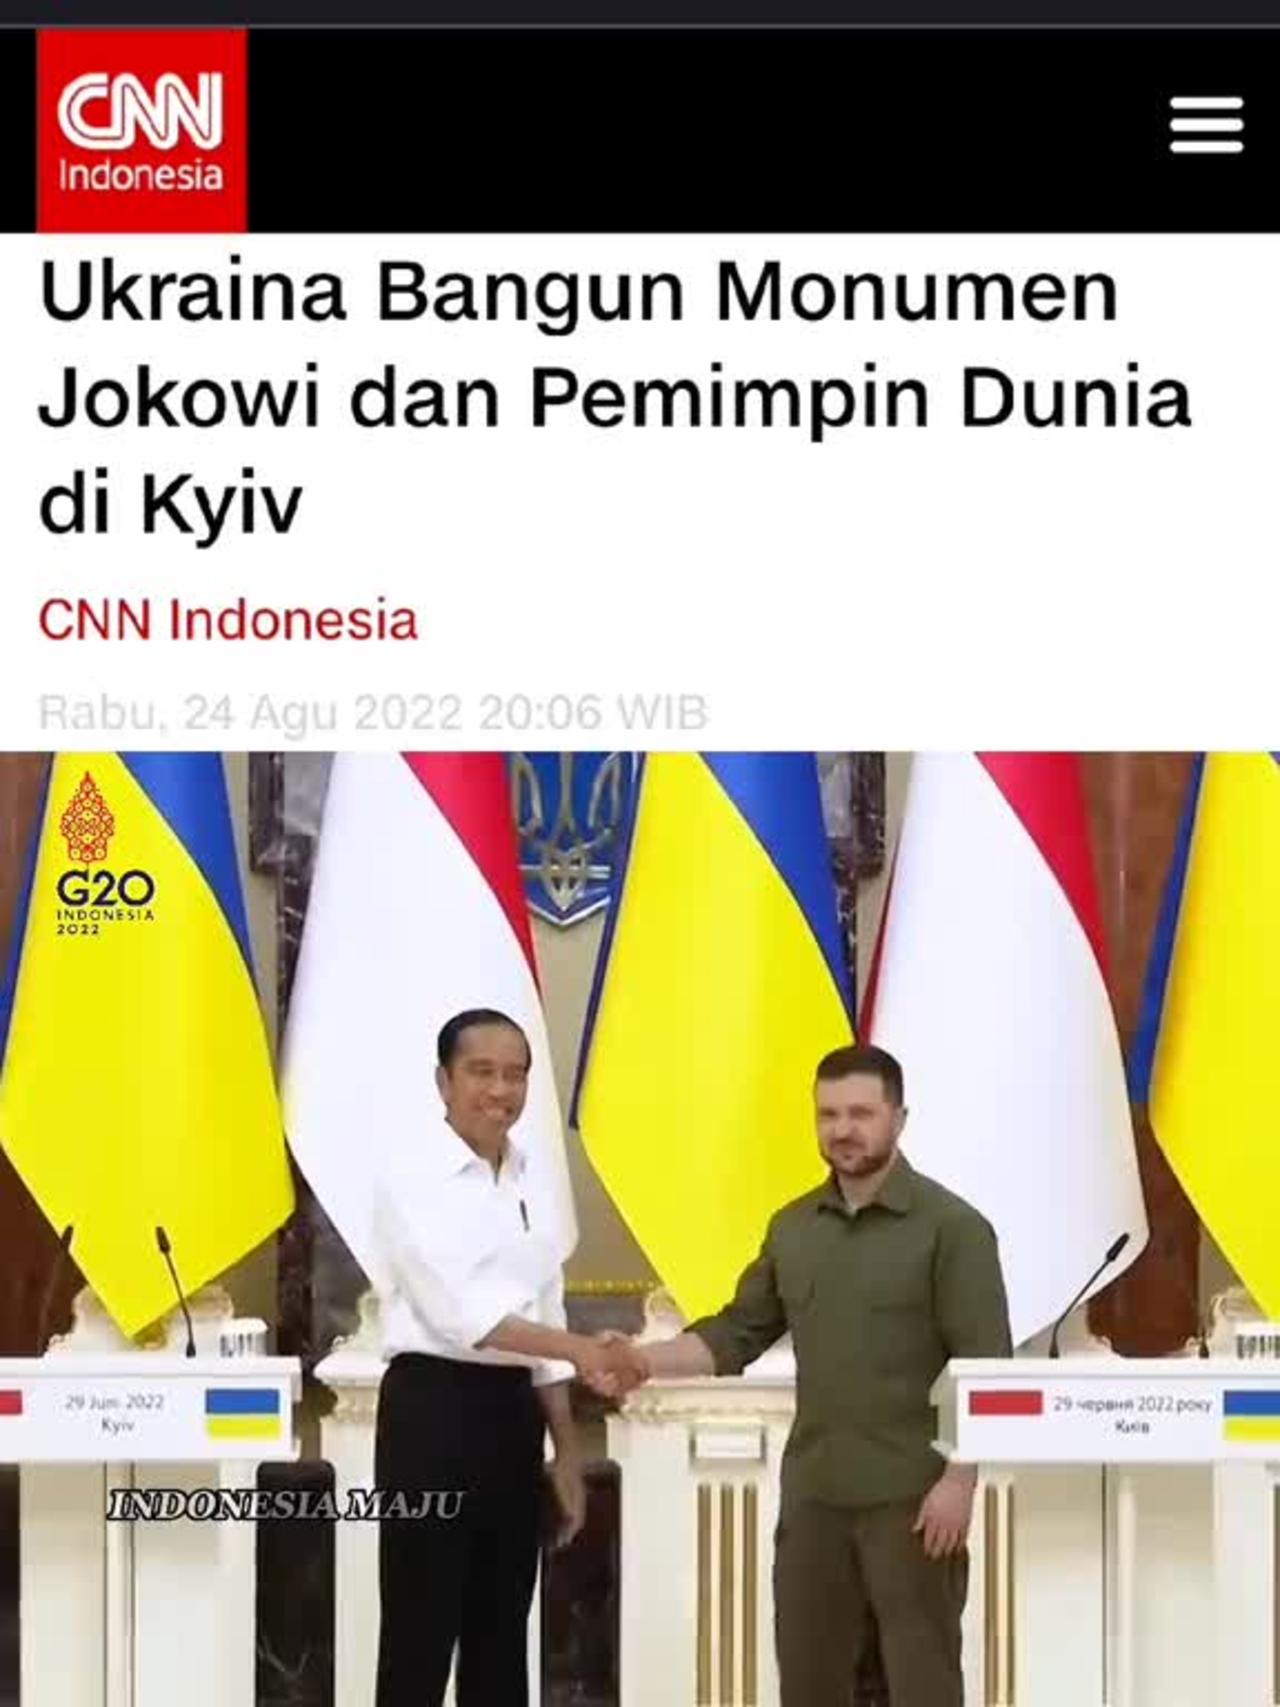 Ukraine builds Jokowi monument in kyiv